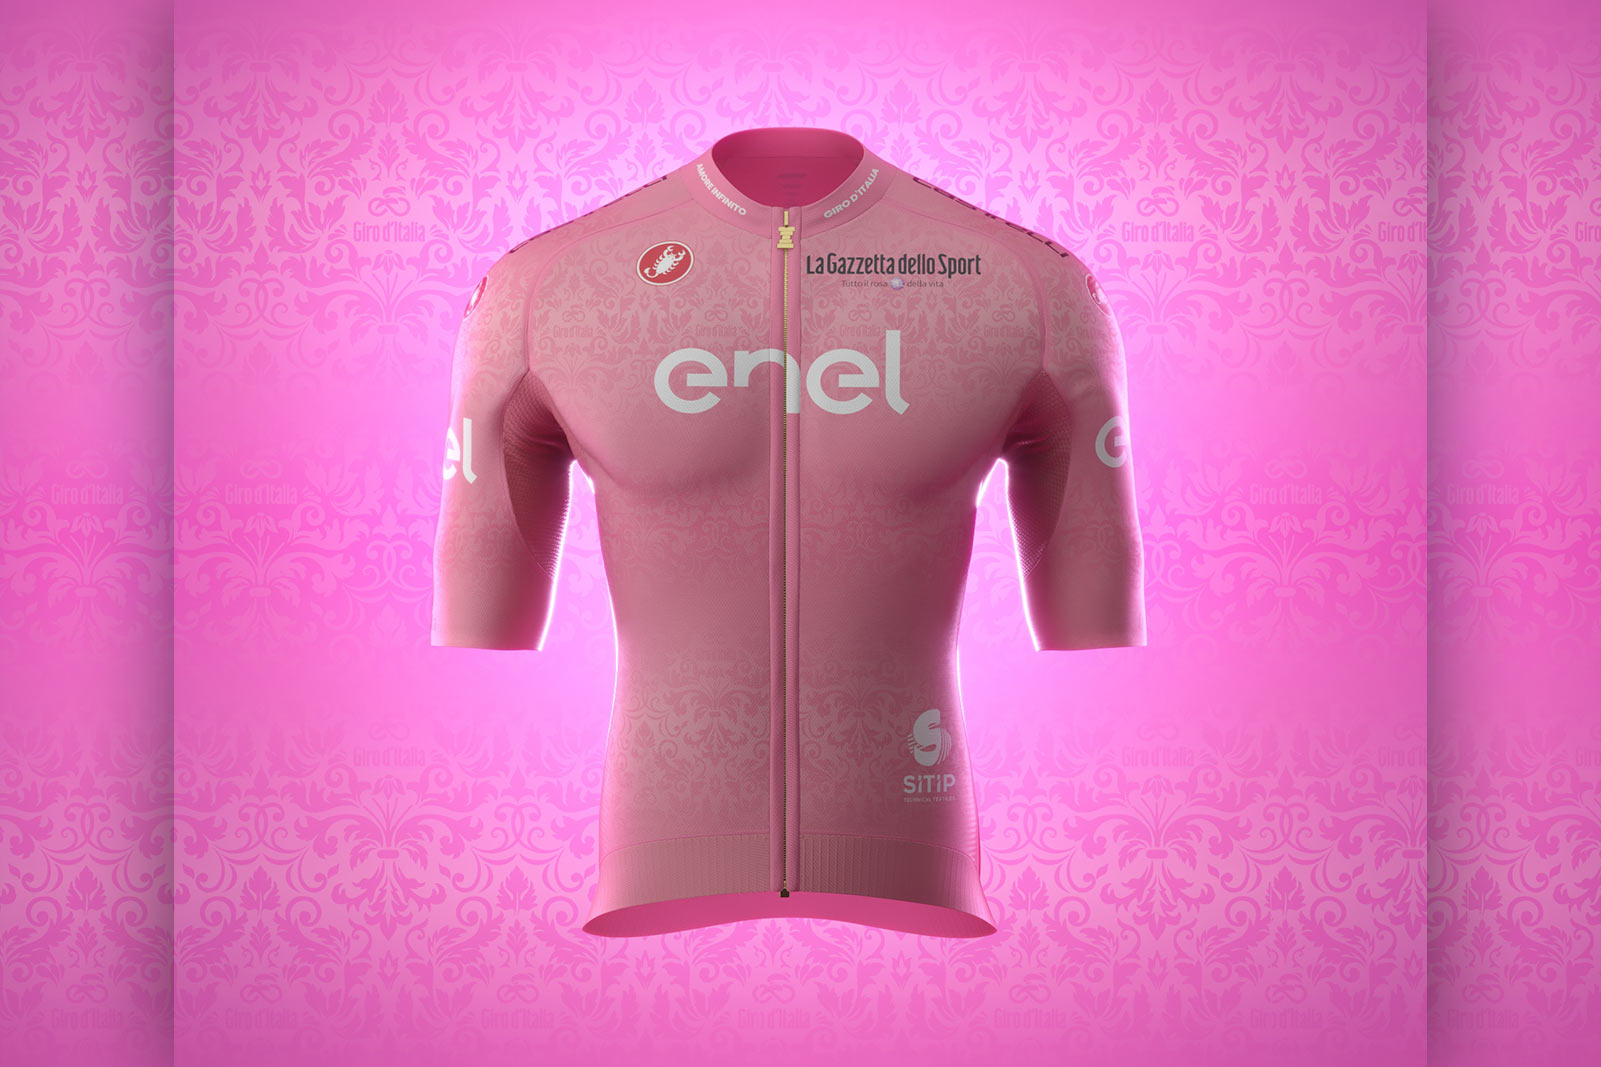 giro d'Italia maglia rosa pink jersey nft 2022